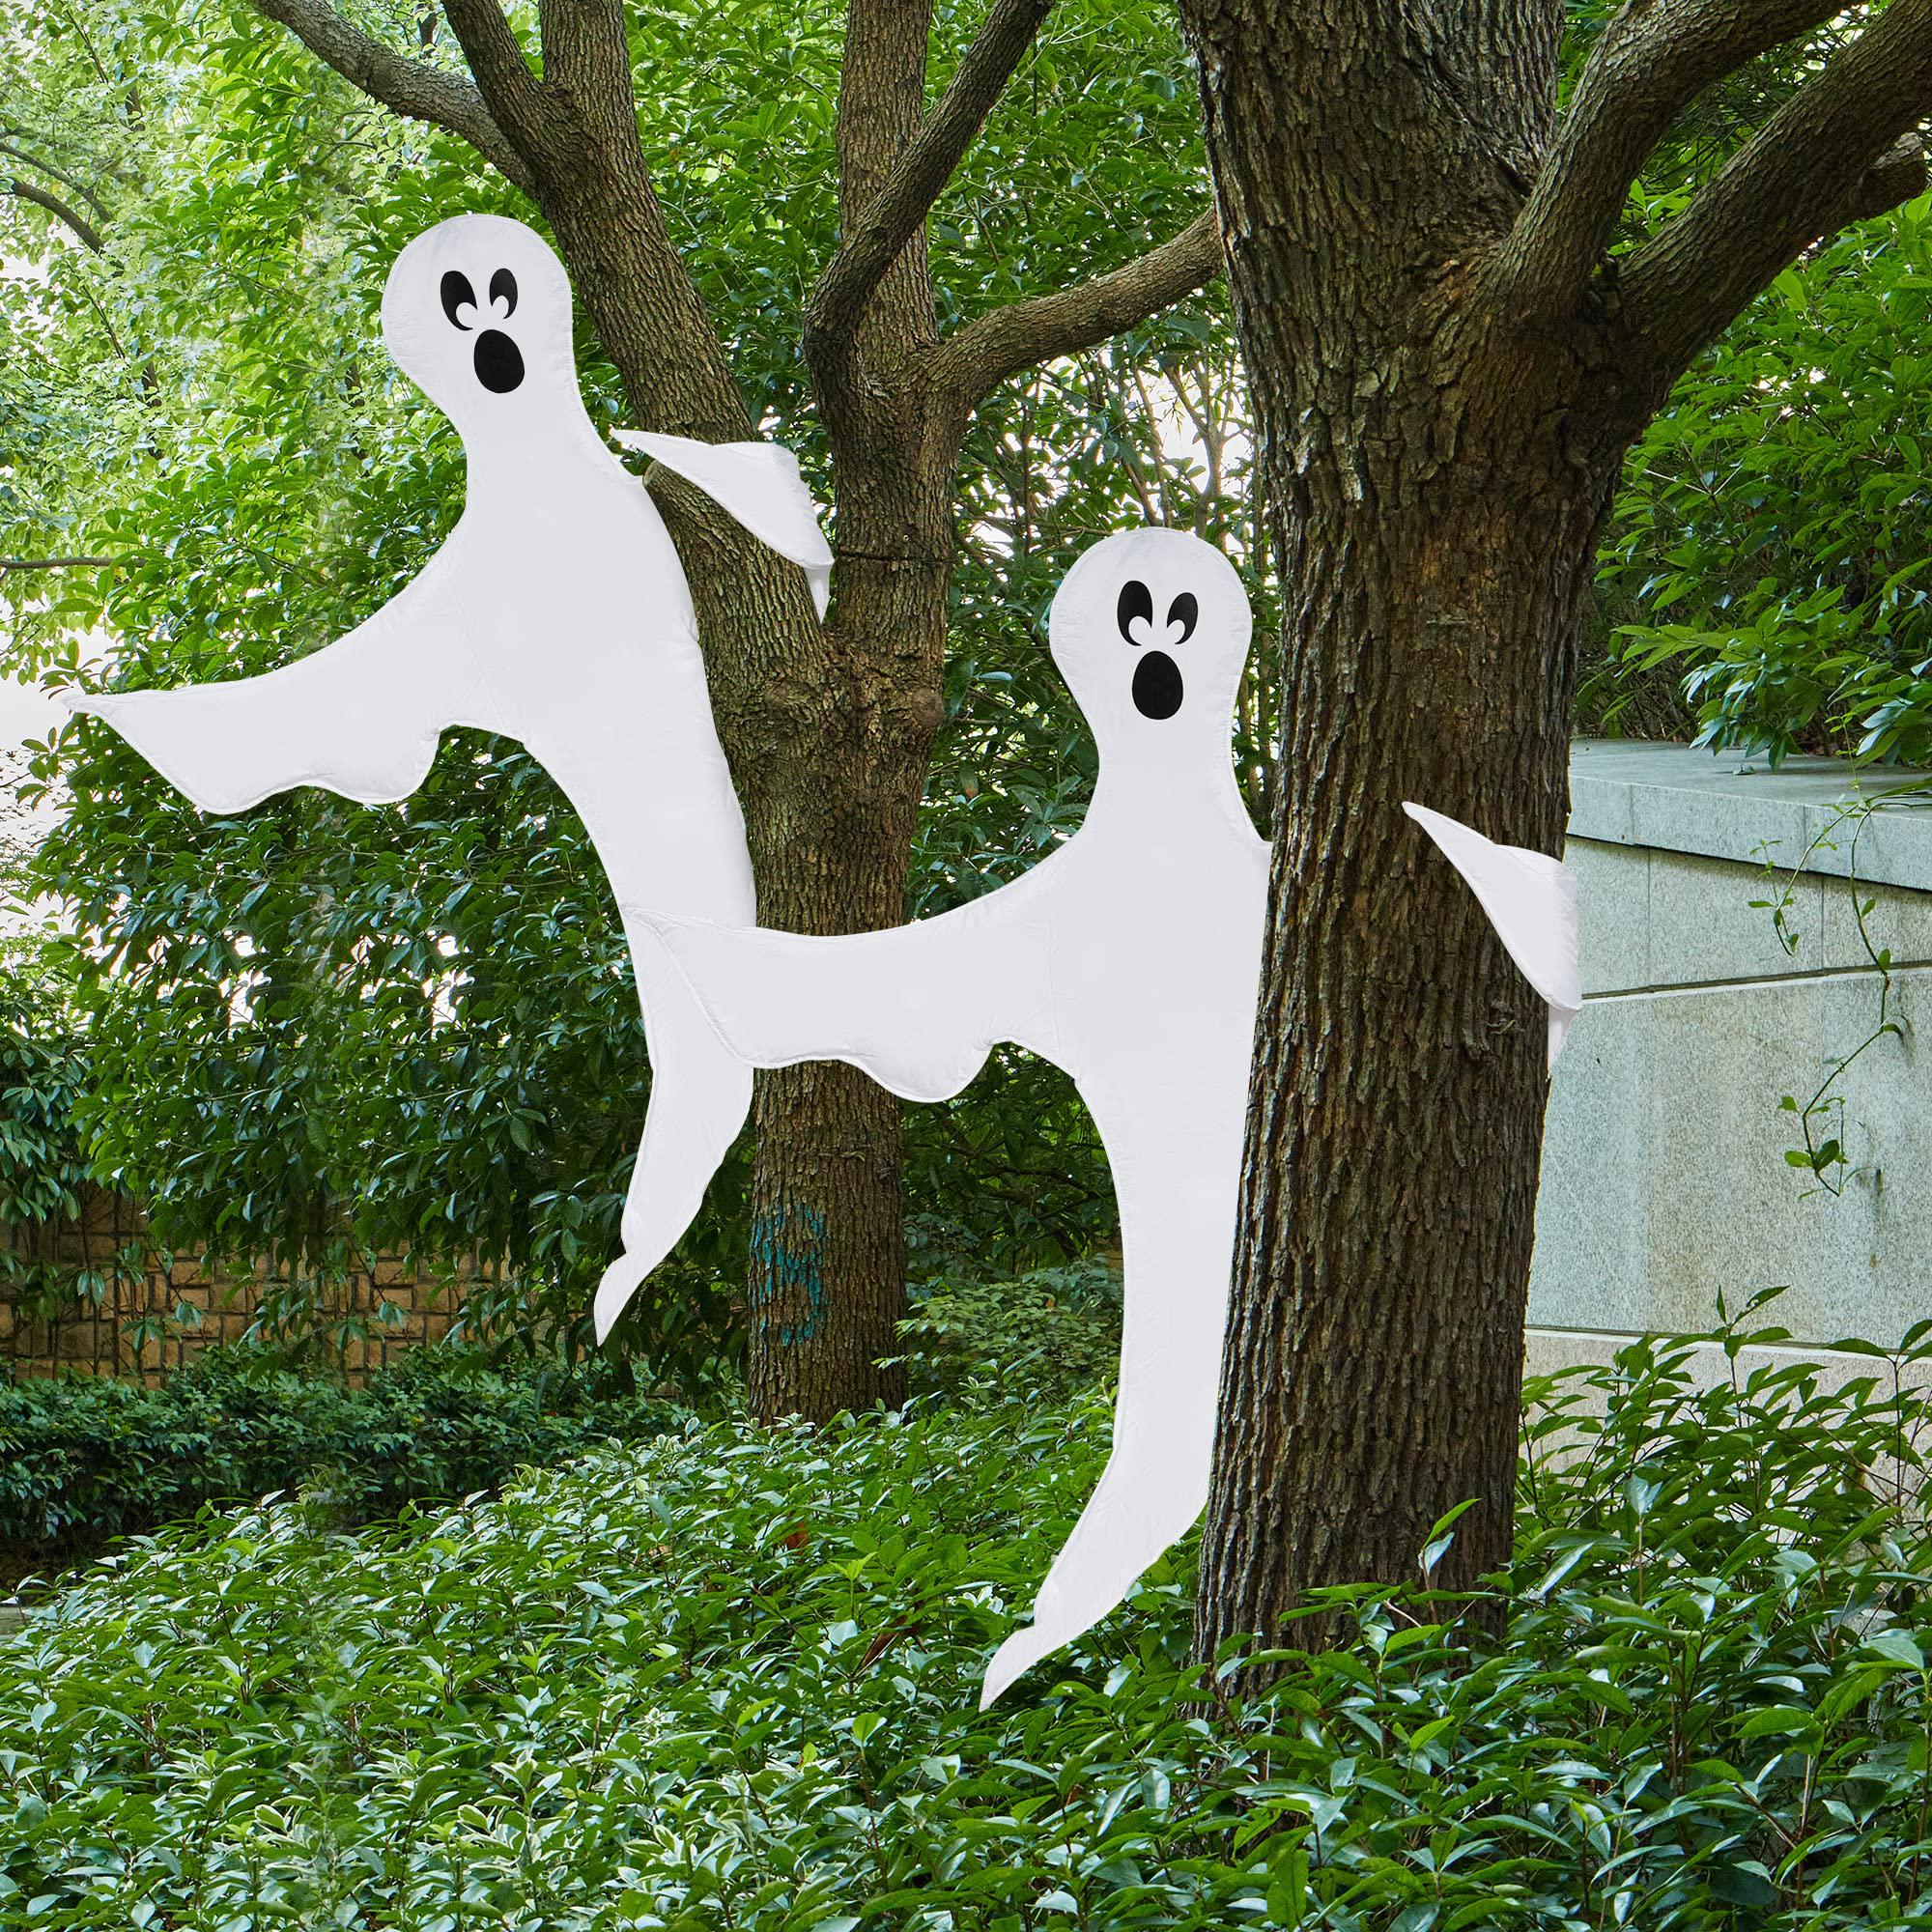 joyin halloween 2 pcs tree wrap ghost decoration, 53 cute face flying ghost for halloween outdoor,lawn,yard,tree decor,ghost 